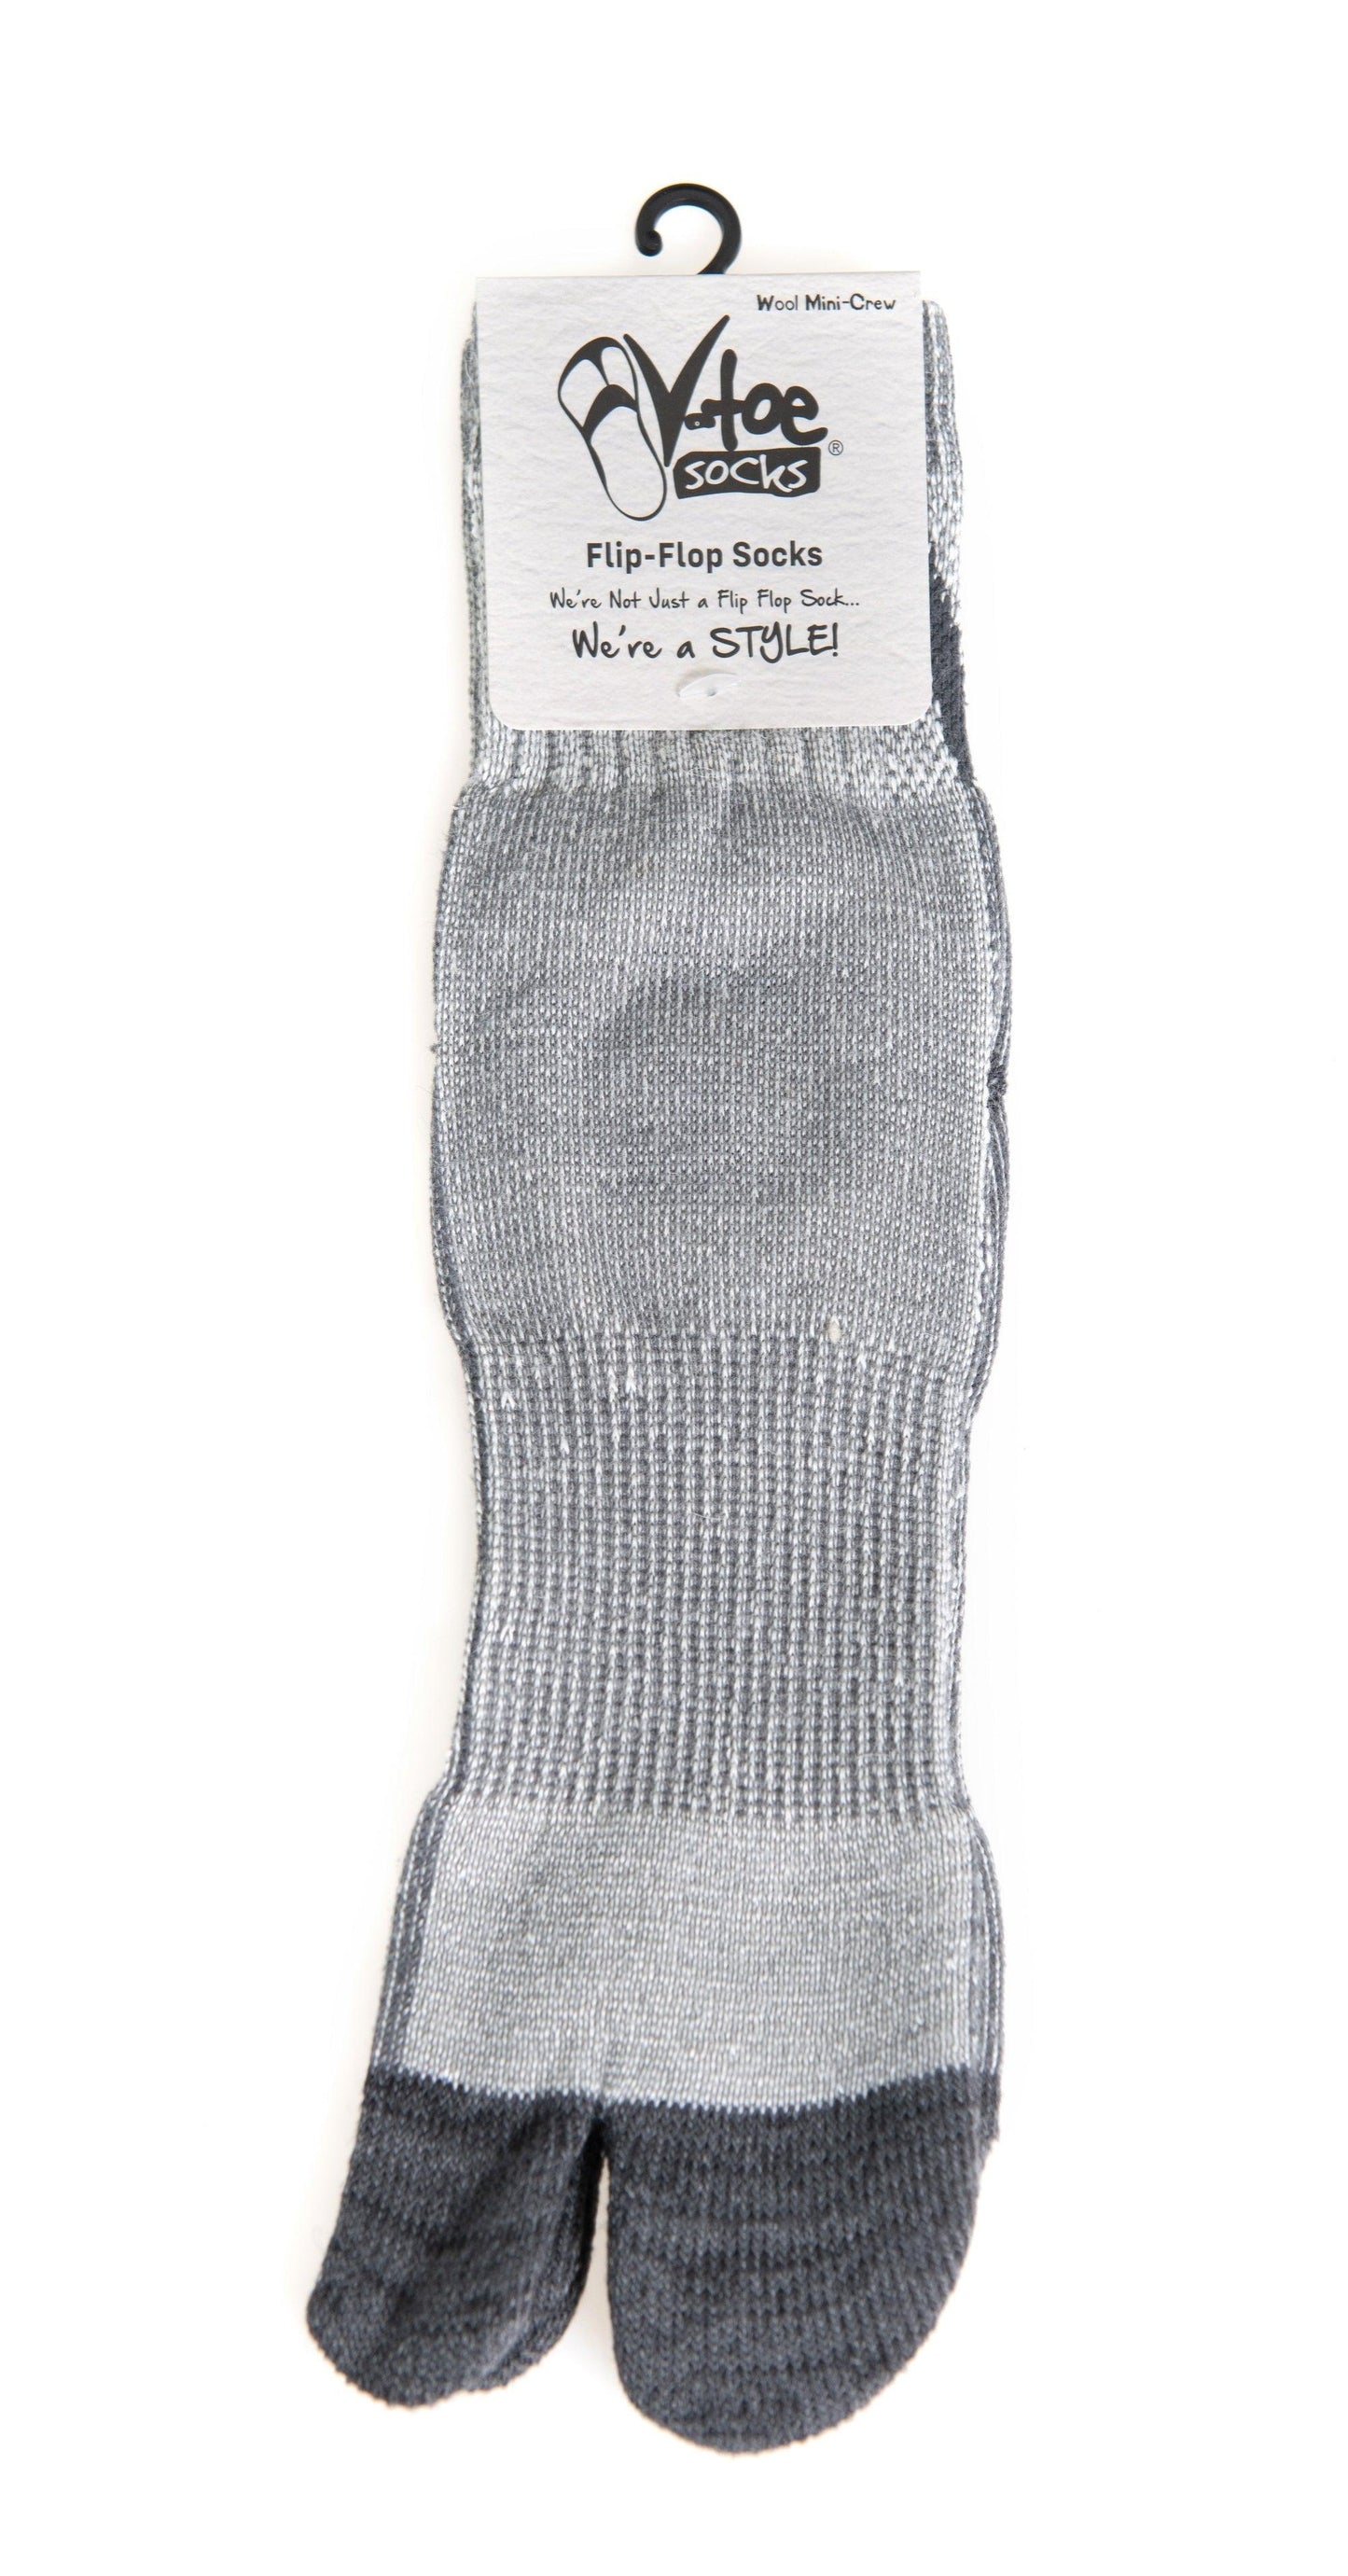 3 Pairs Wool Light Grey For Hiking Or Casual Flip-Flop VToe Tabi Socks by V-Toe Socks, Inc - The Hammer Sports